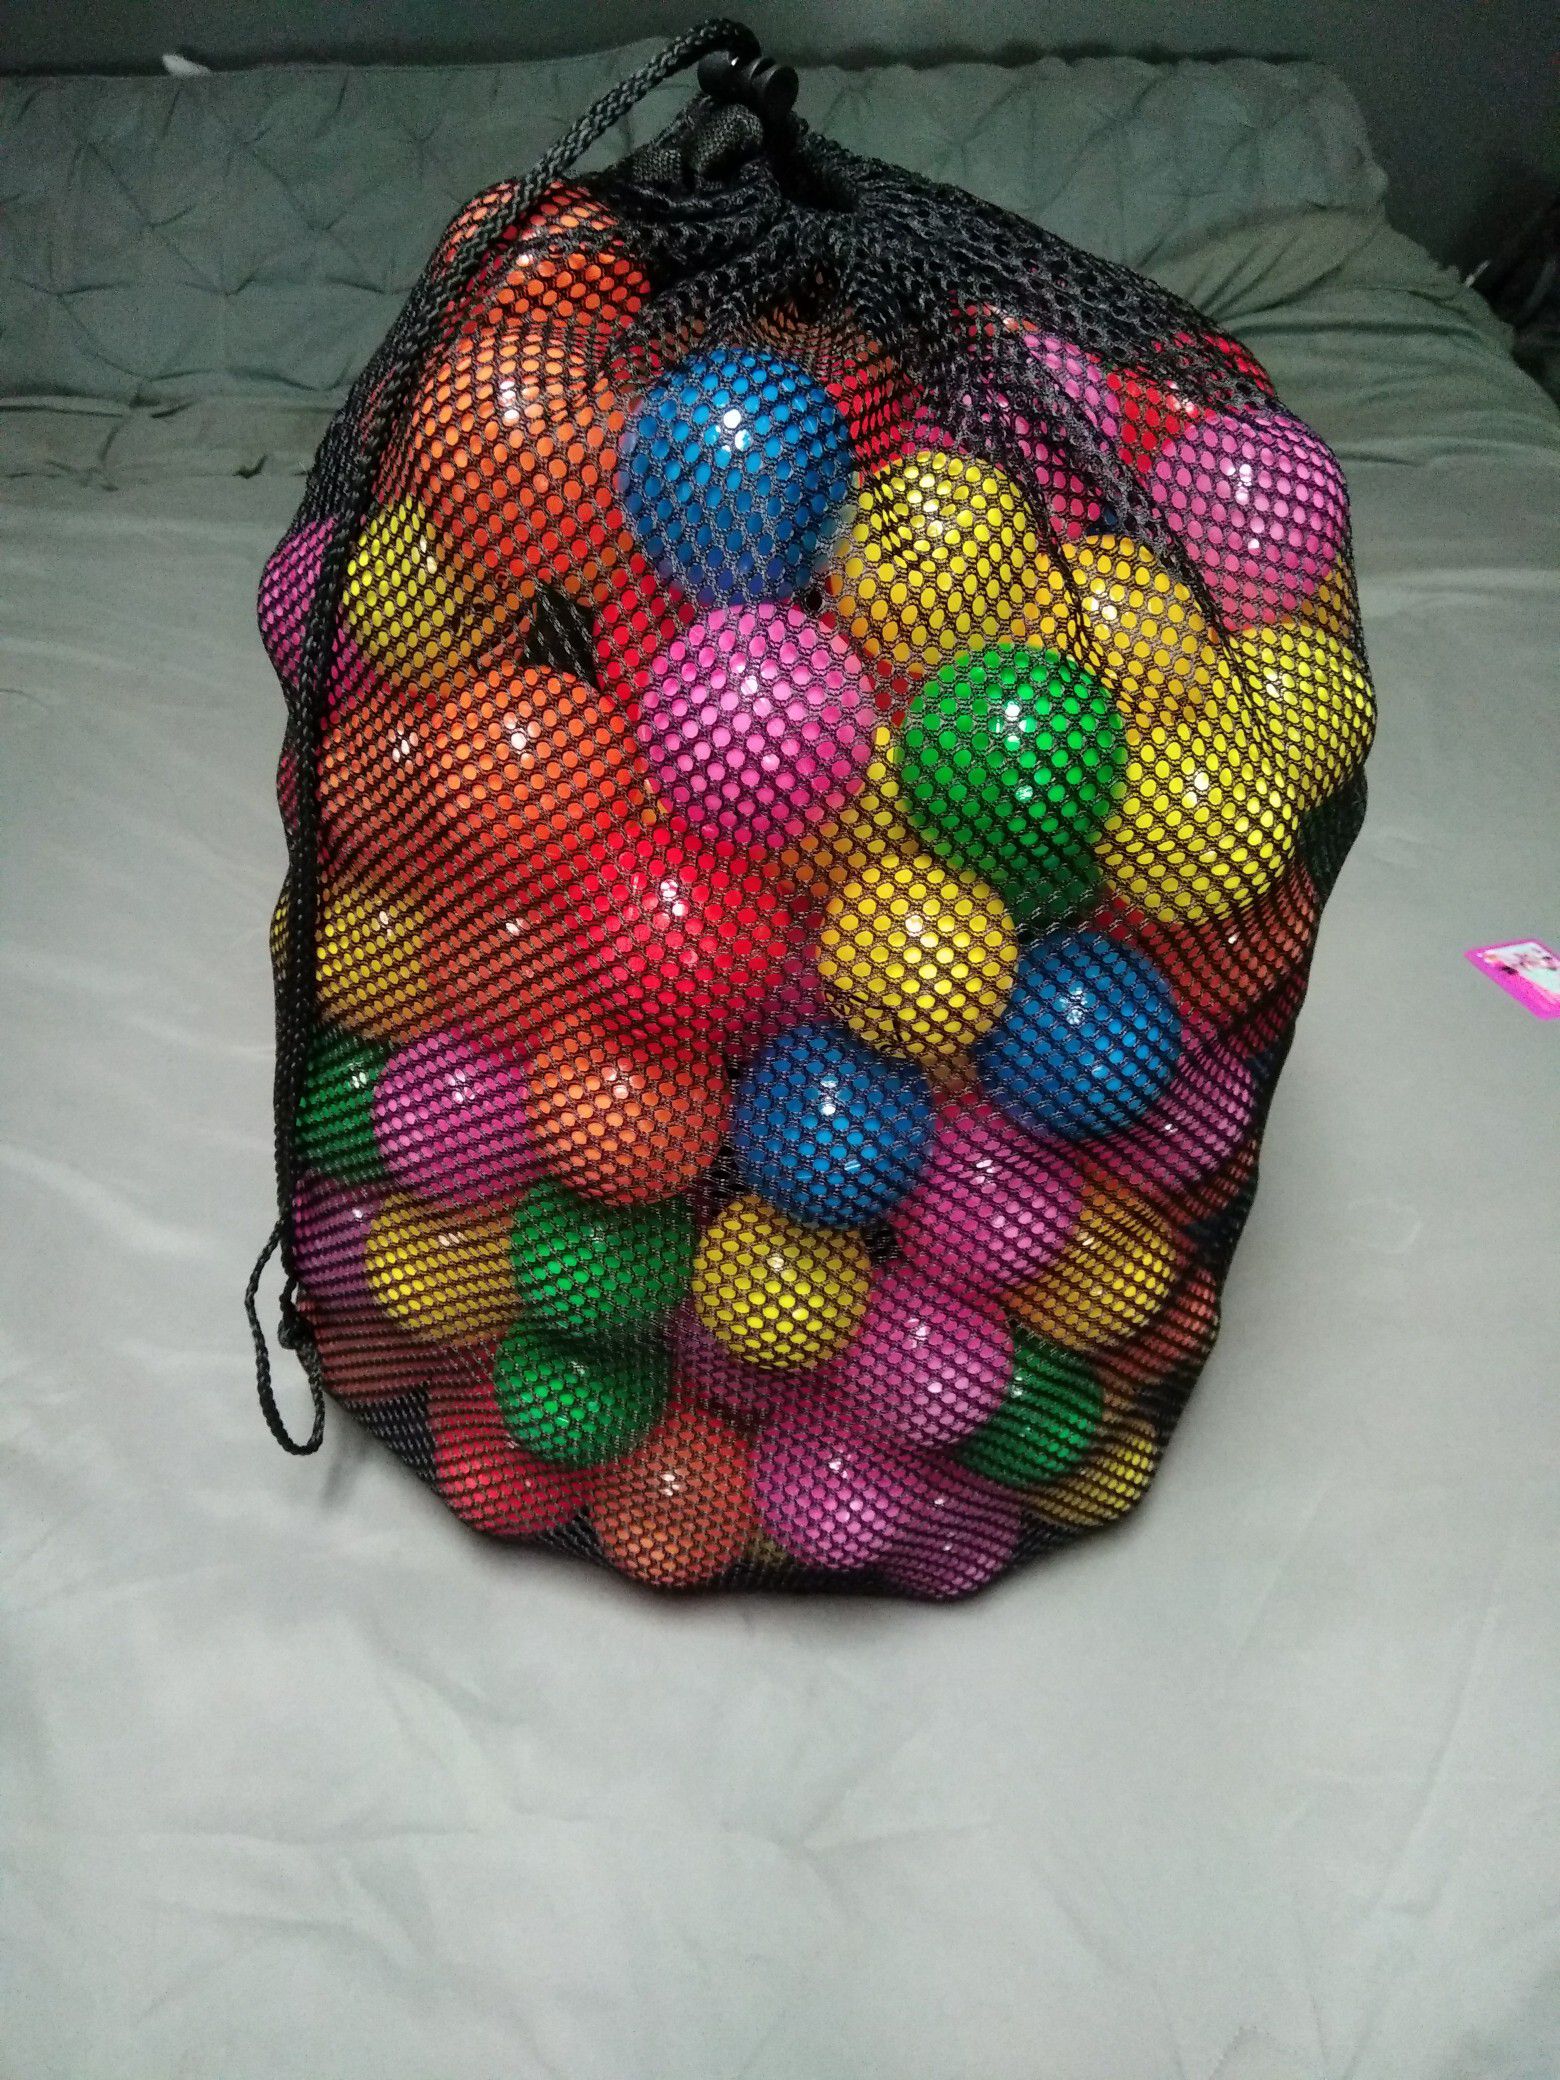 Bag of balls for ball pit